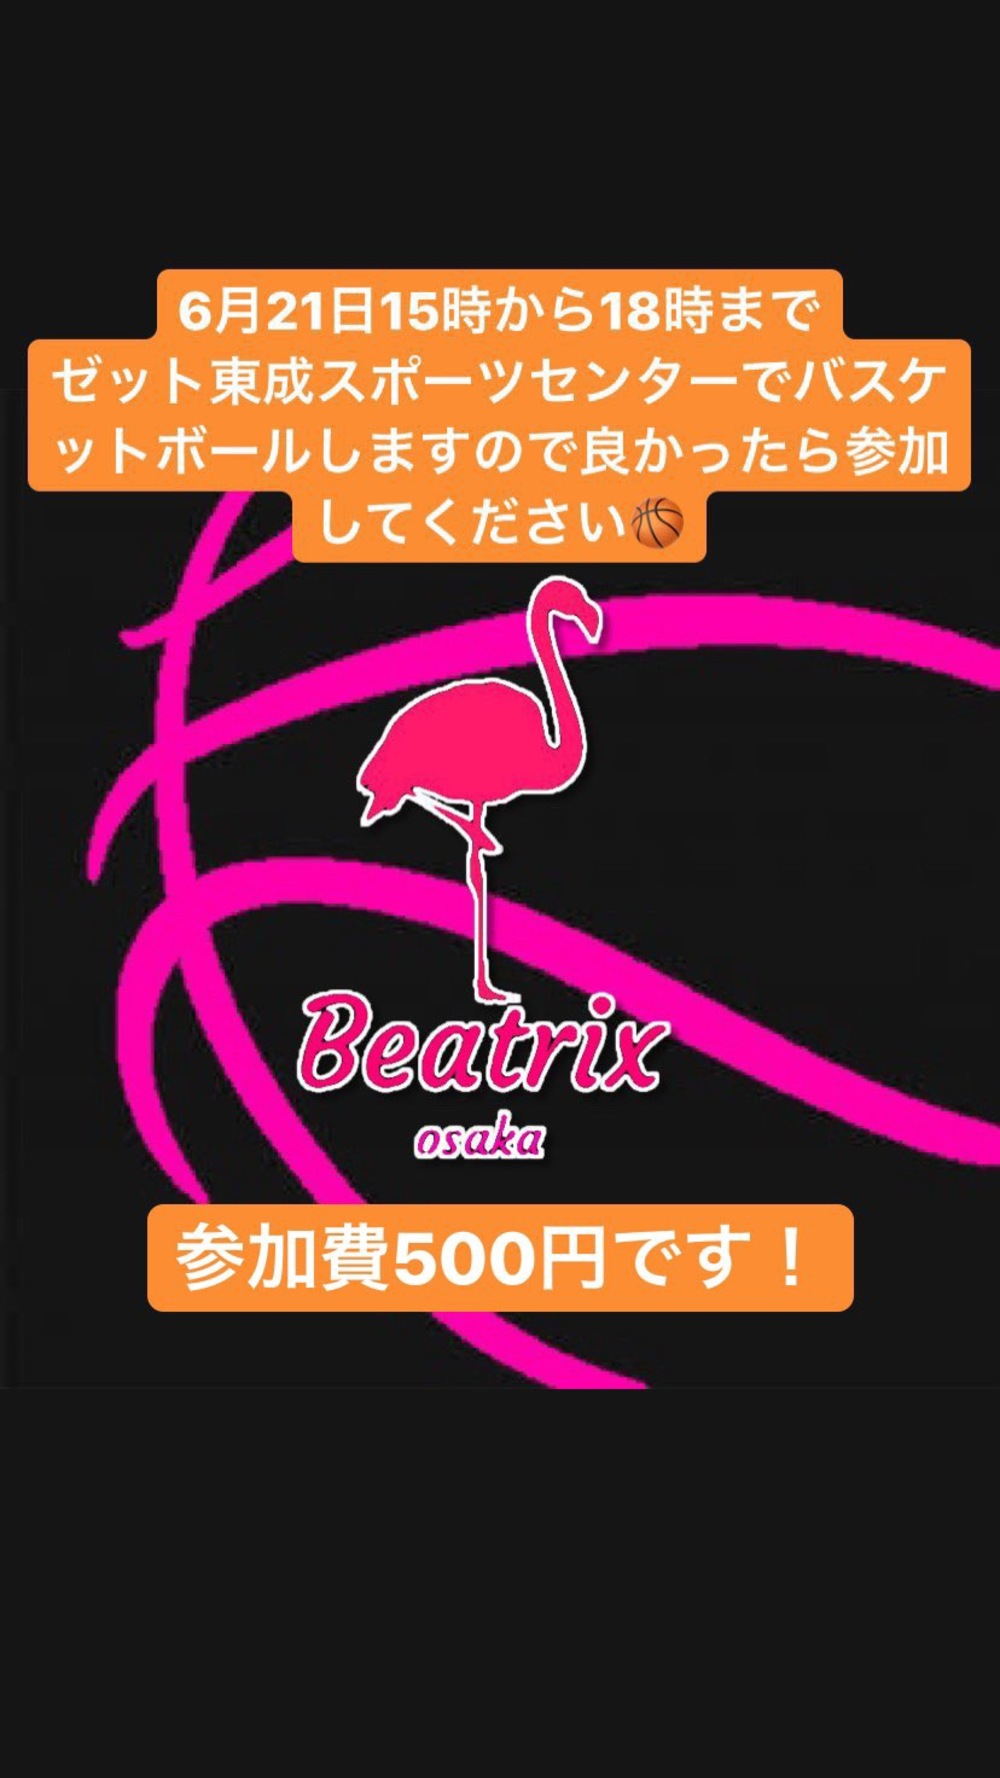 大阪 Beatrix